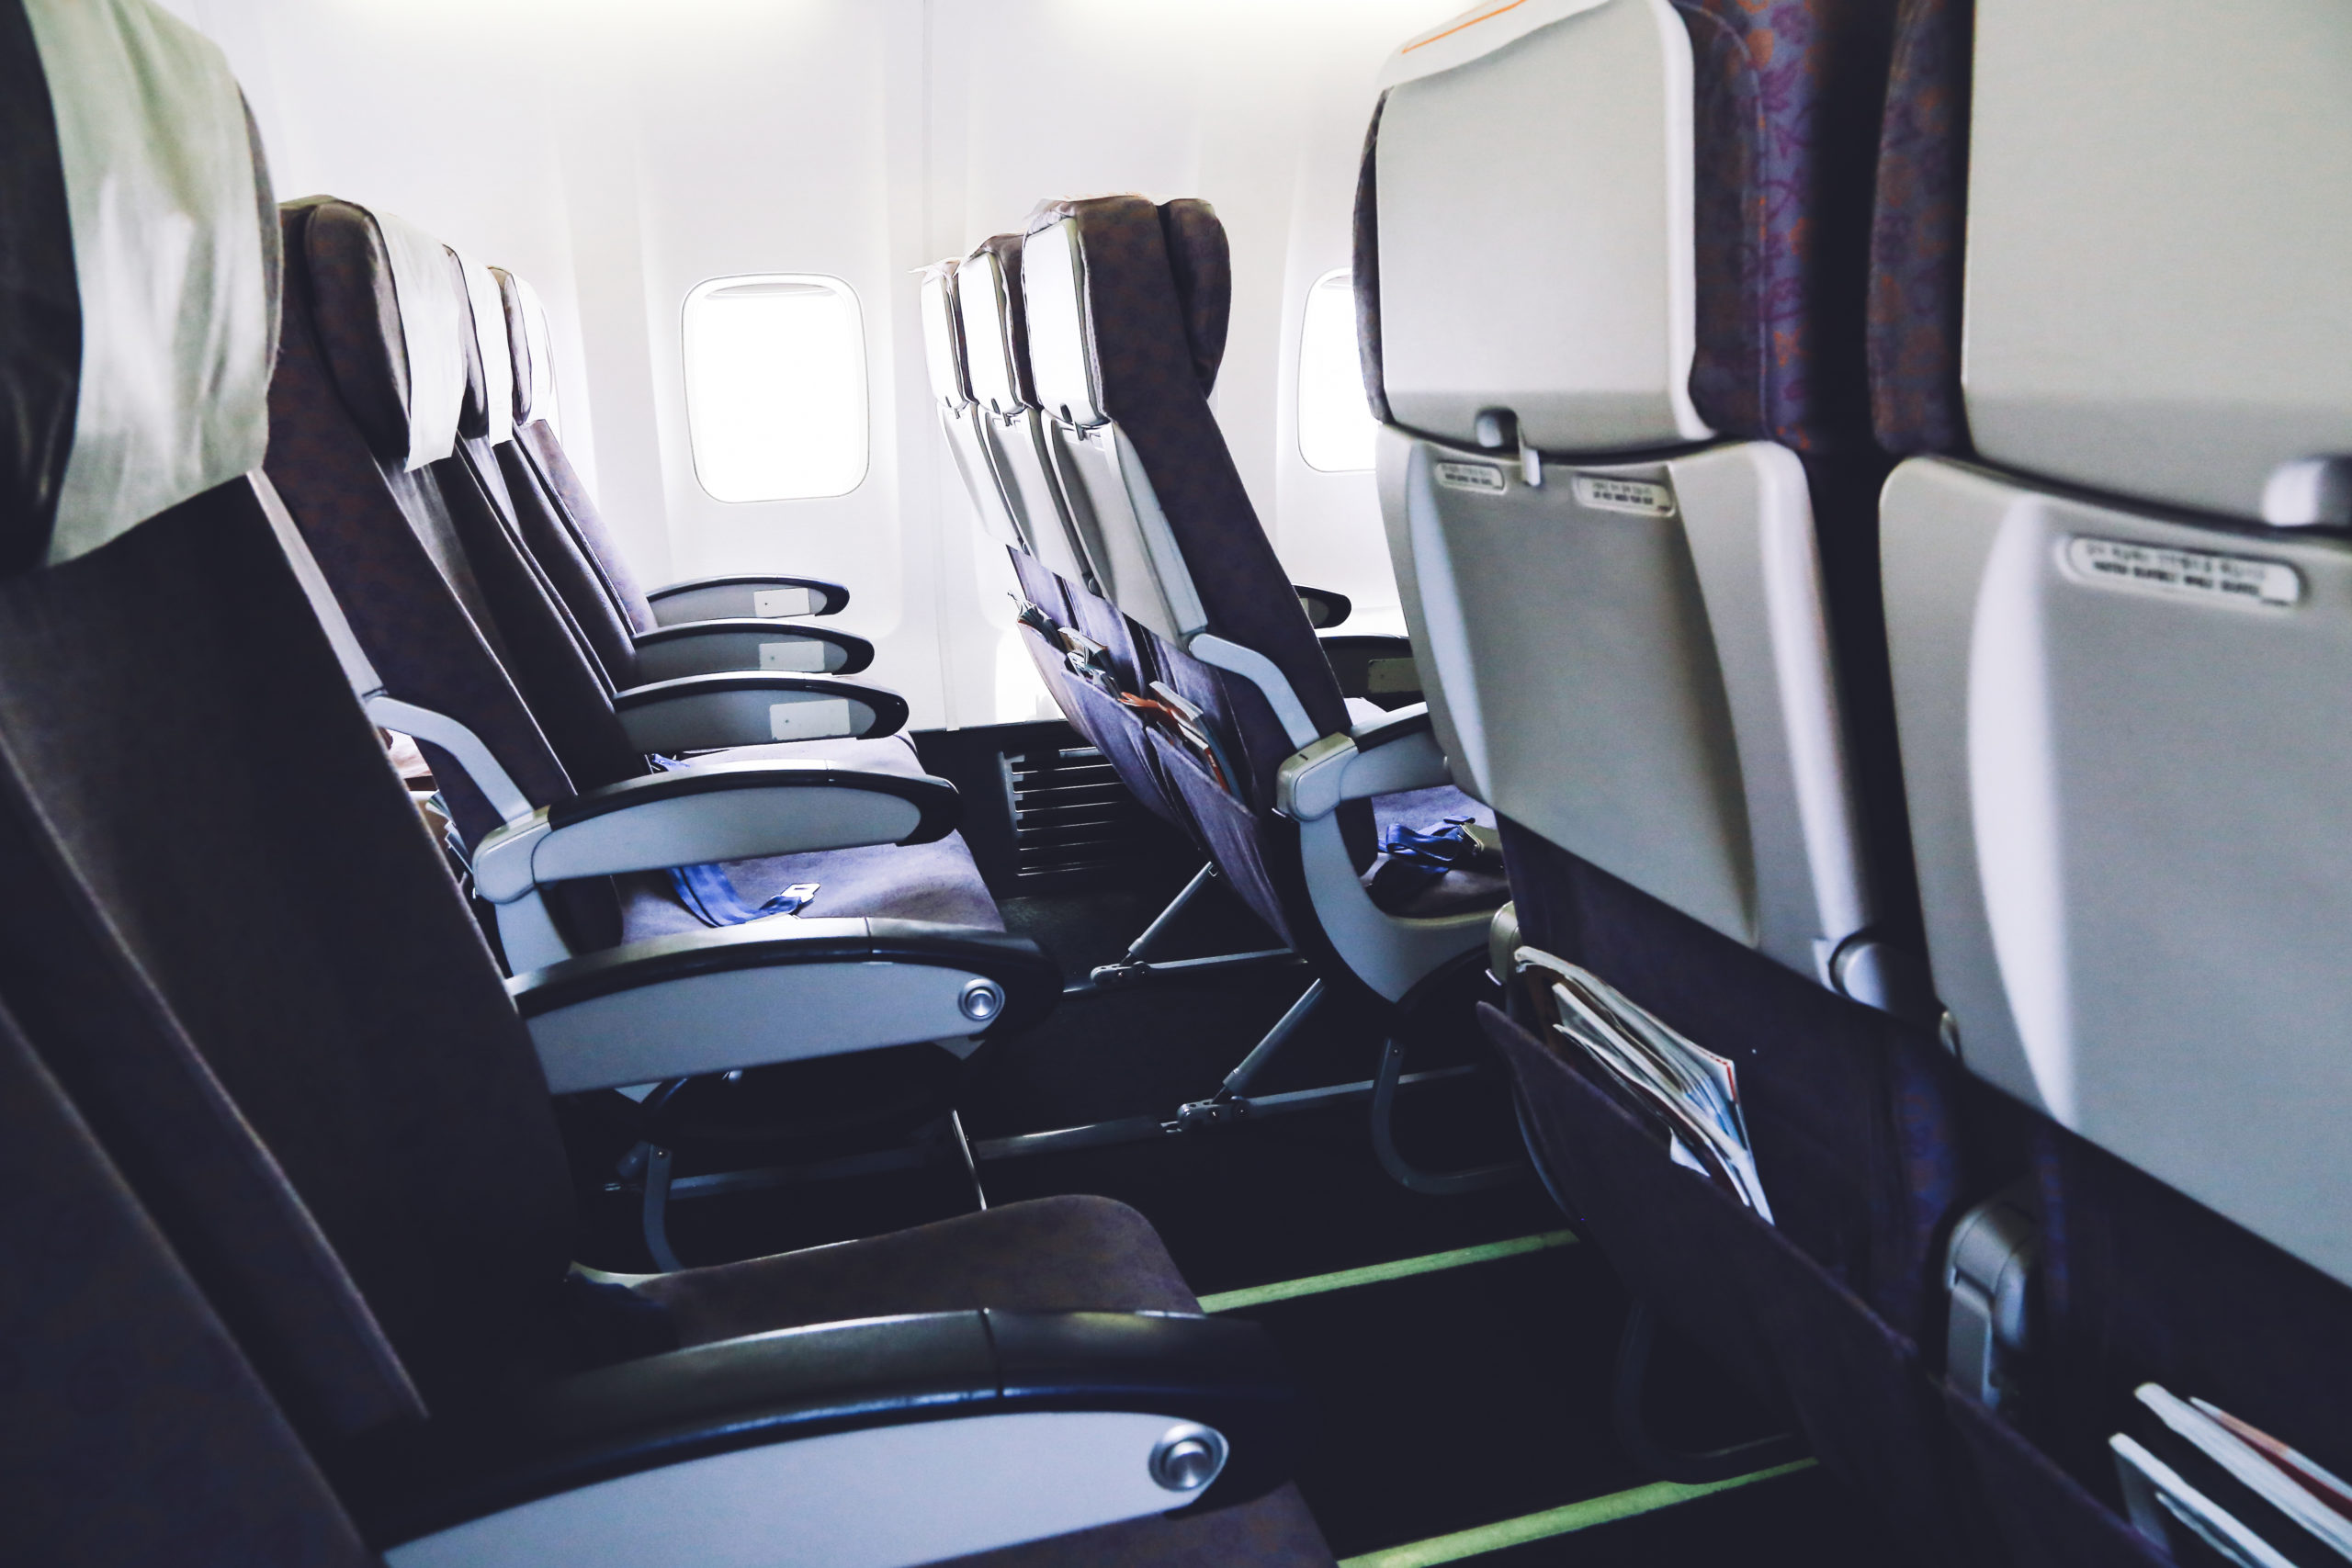 Empty middle airplane seats would cut coronavirus exposure – study